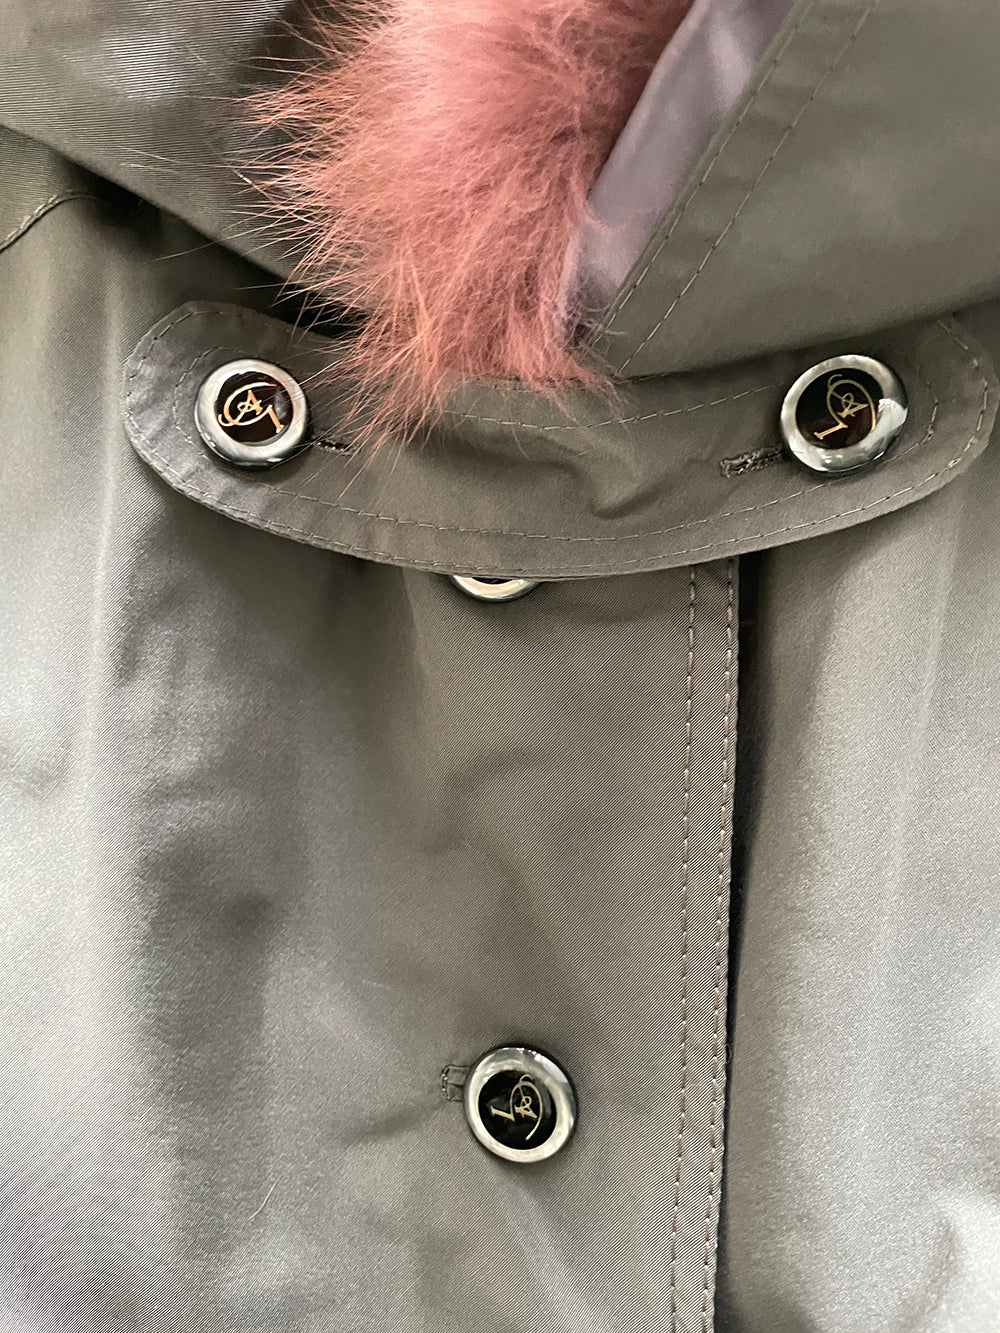 charcoal silk coat with mink fur